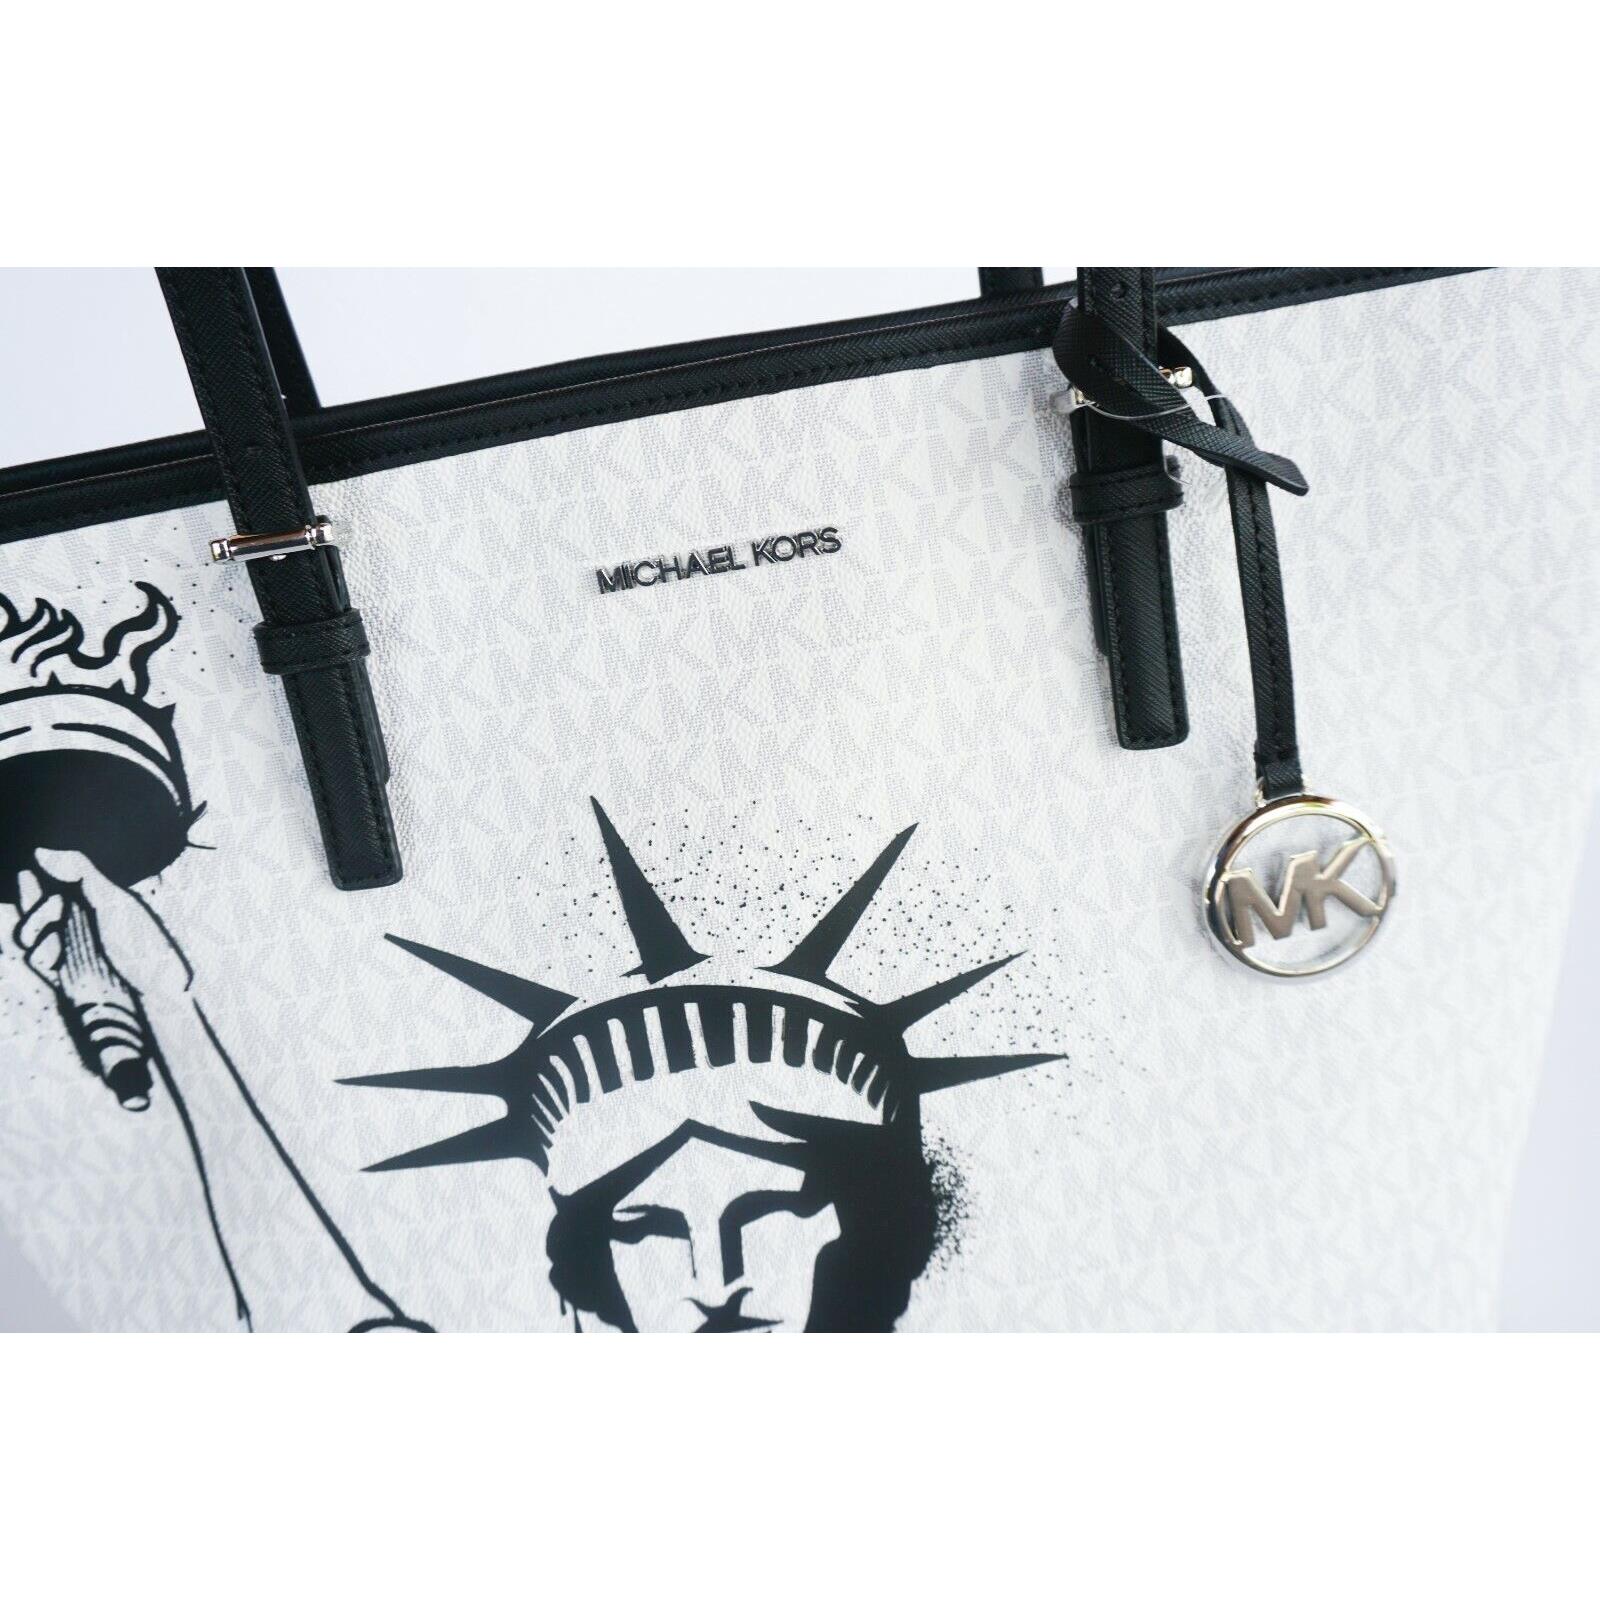 Michael Kors  bag  JET SET TRAVEL - White Black Exterior, Black Lining, Black Handle/Strap 5